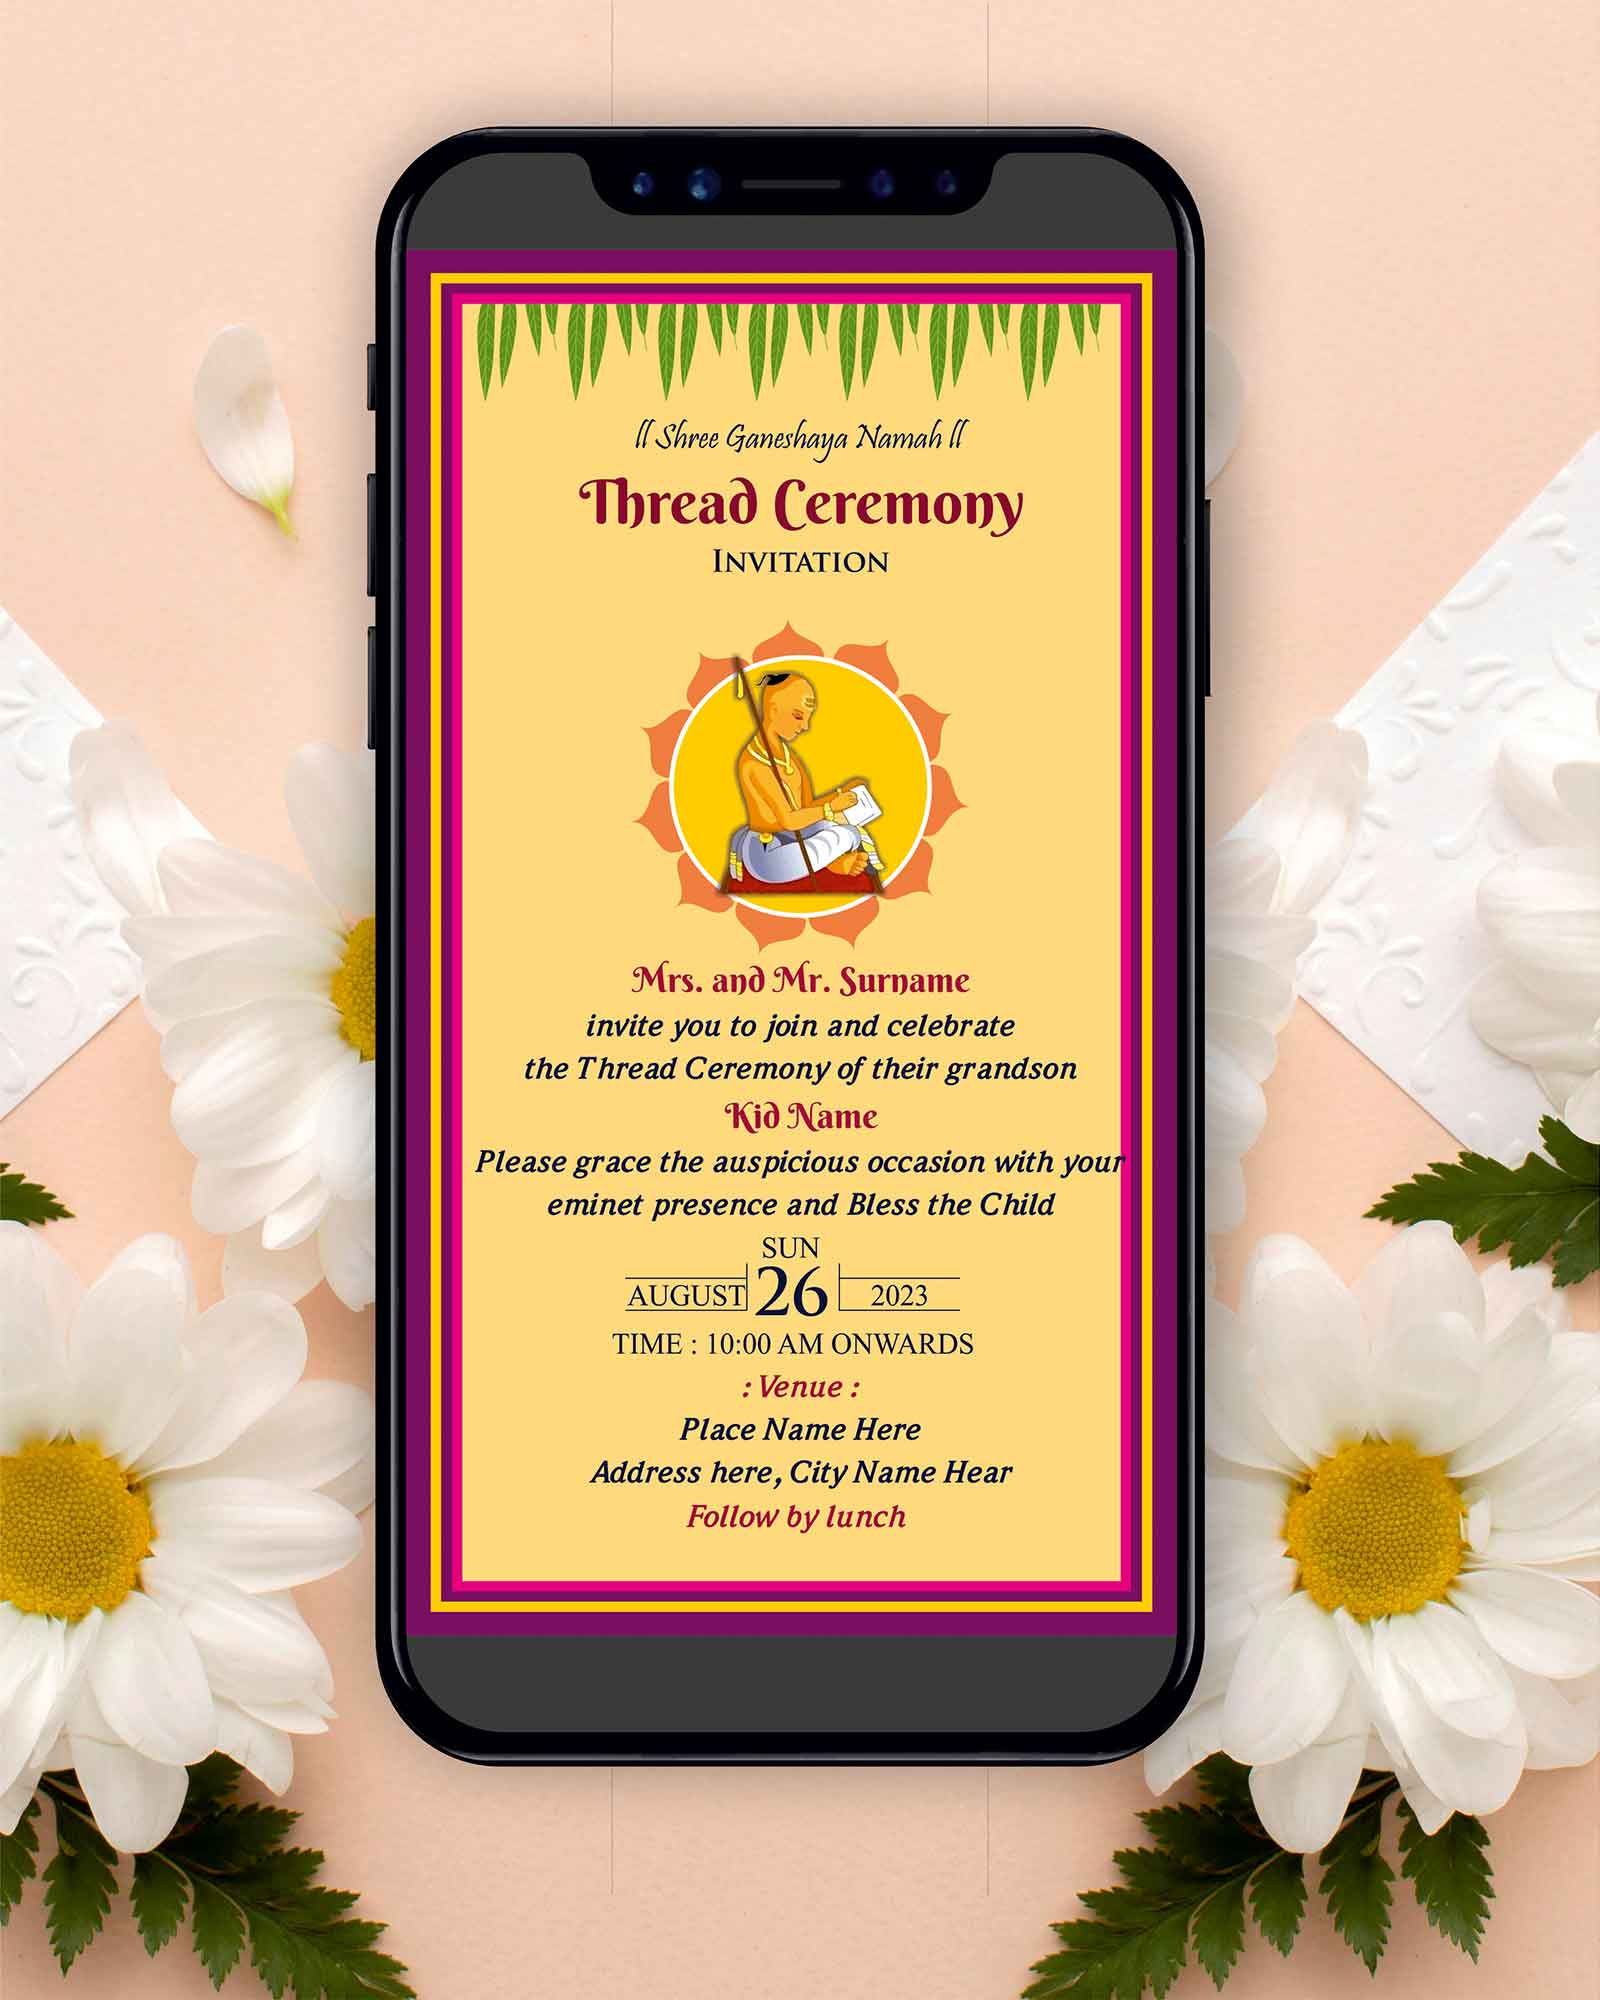 Thread Ceremony Invitation